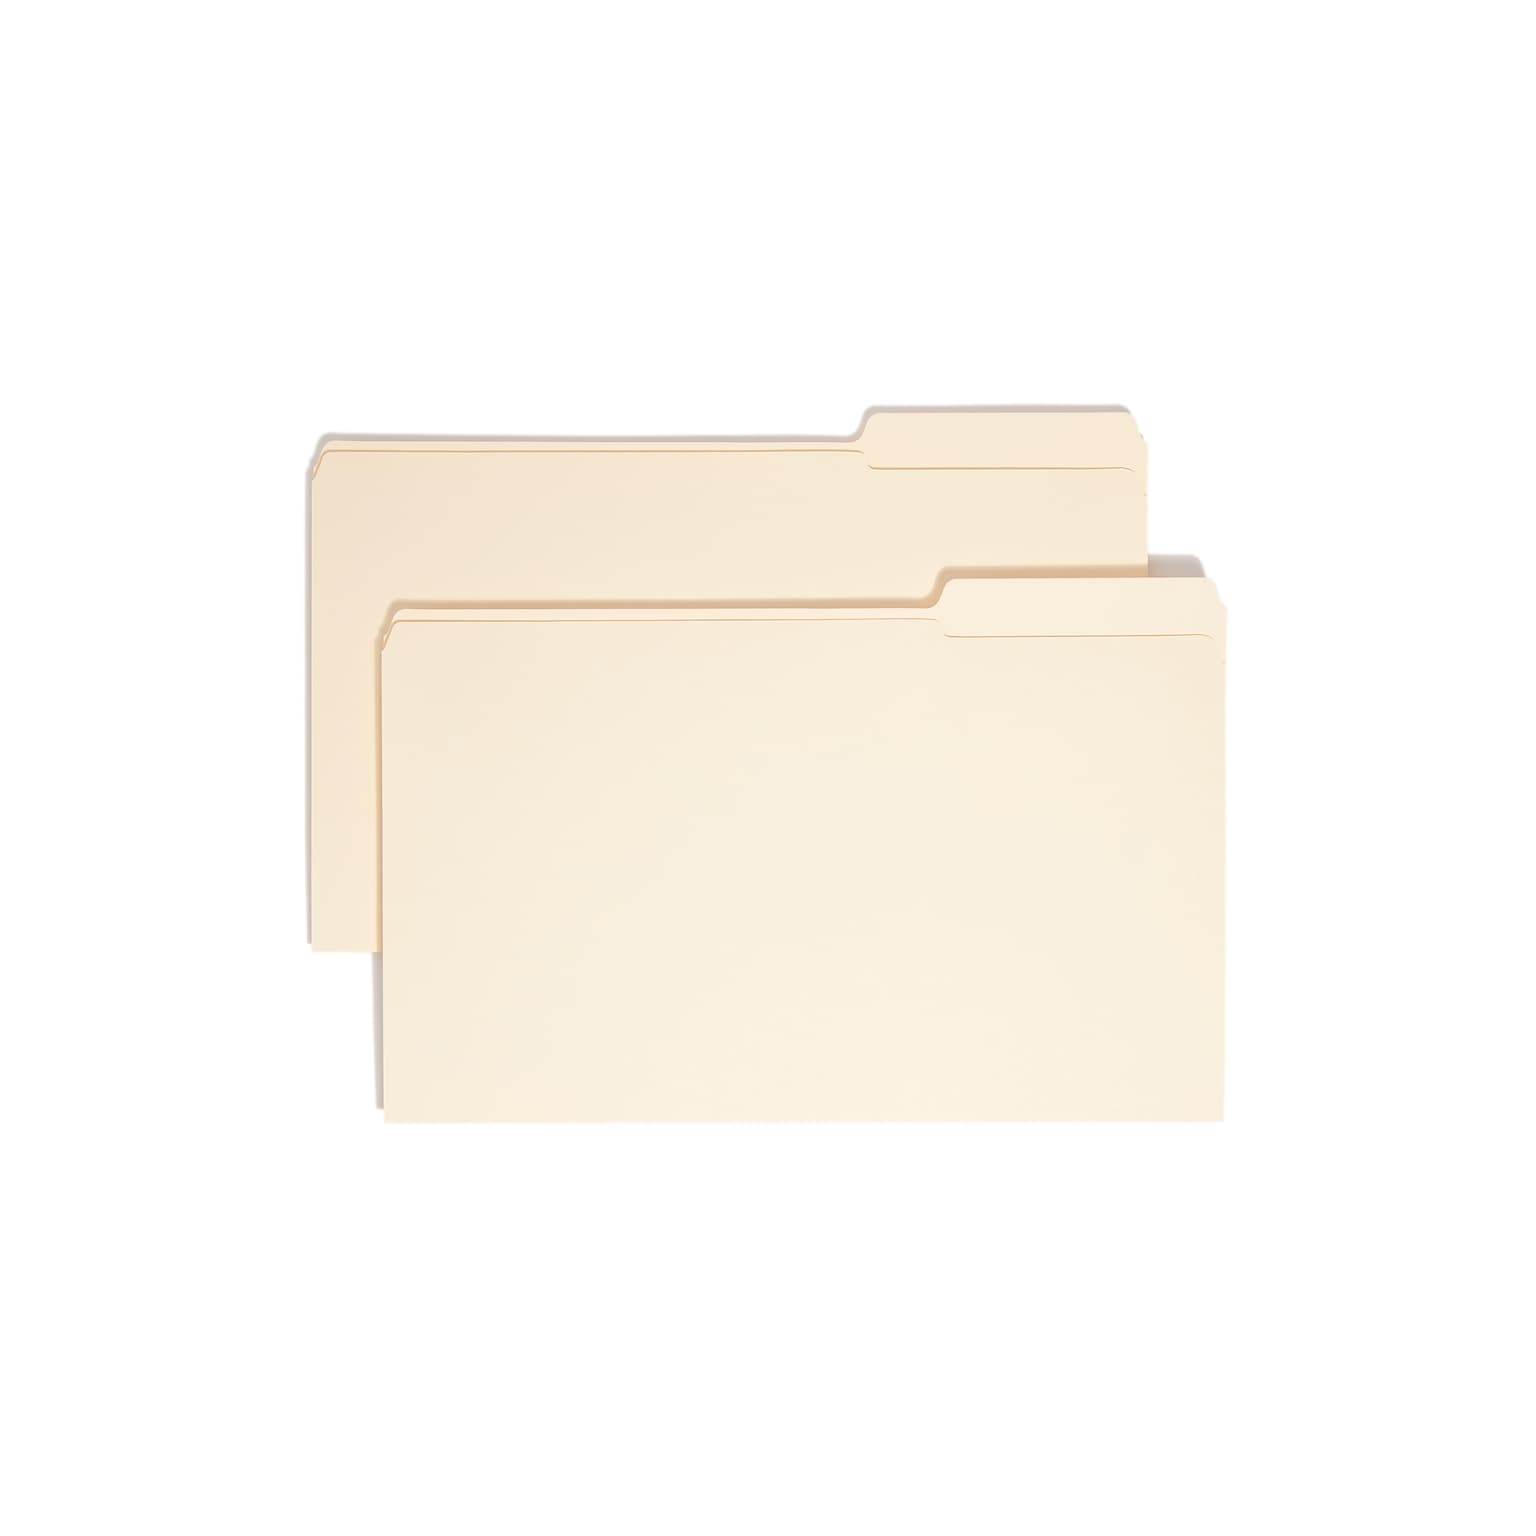 Smead® File Folder, Reinforced 1/3-Cut Tab Right Position, Legal Size, Manila, 100/Box (15337)